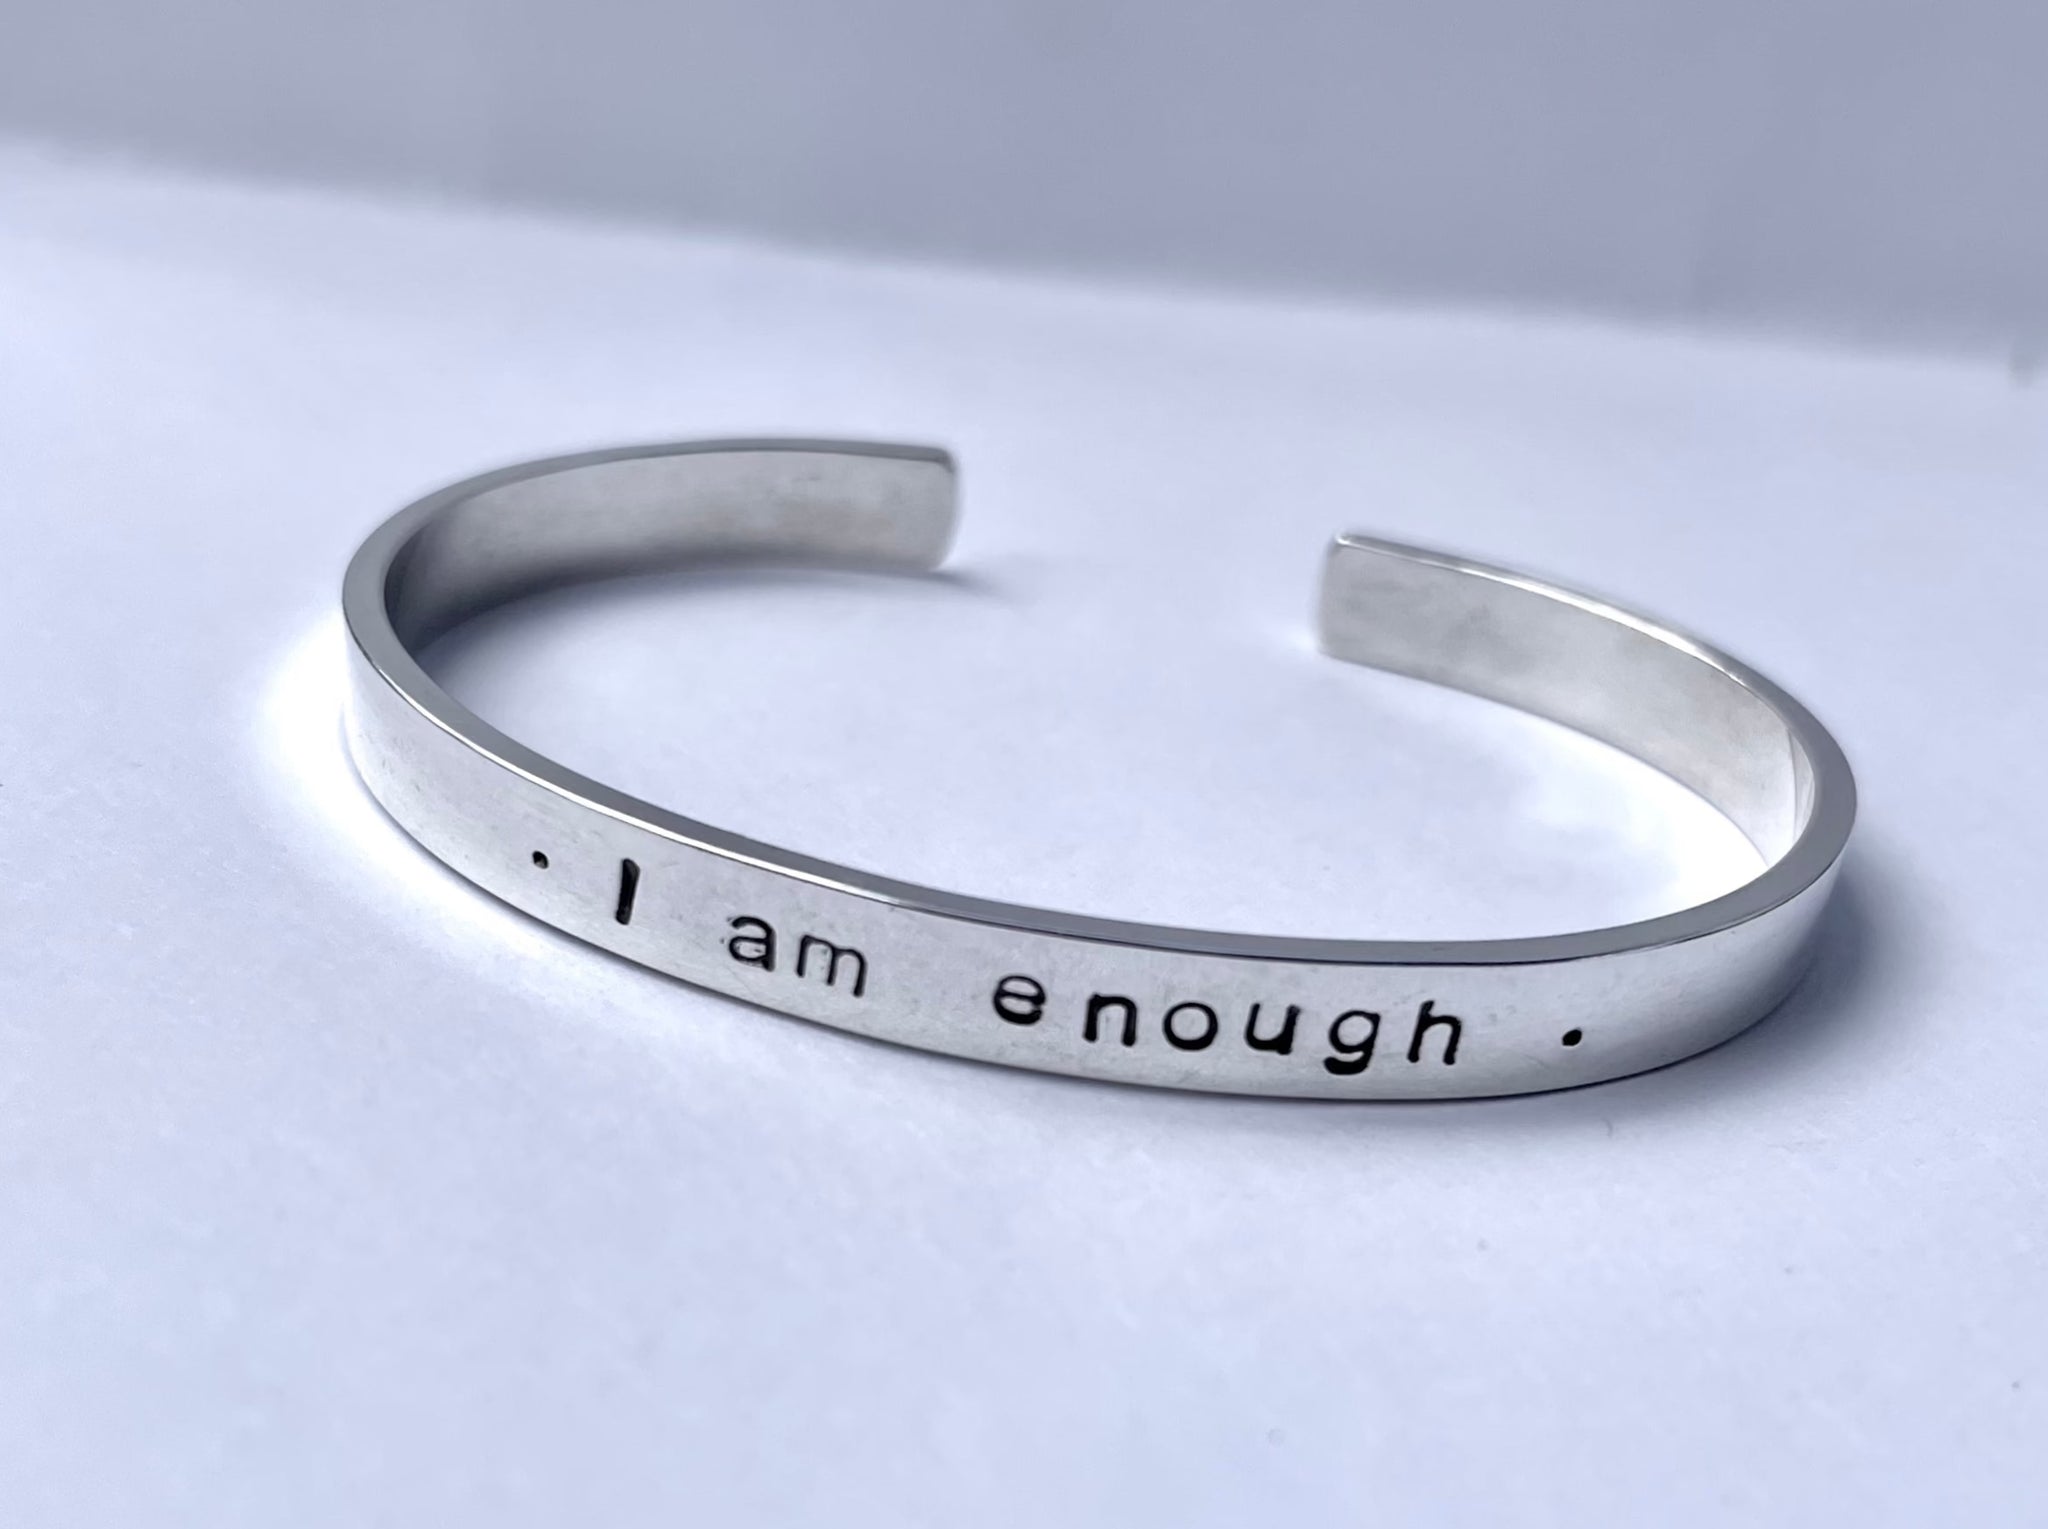 I am enough silver cuff bracelet